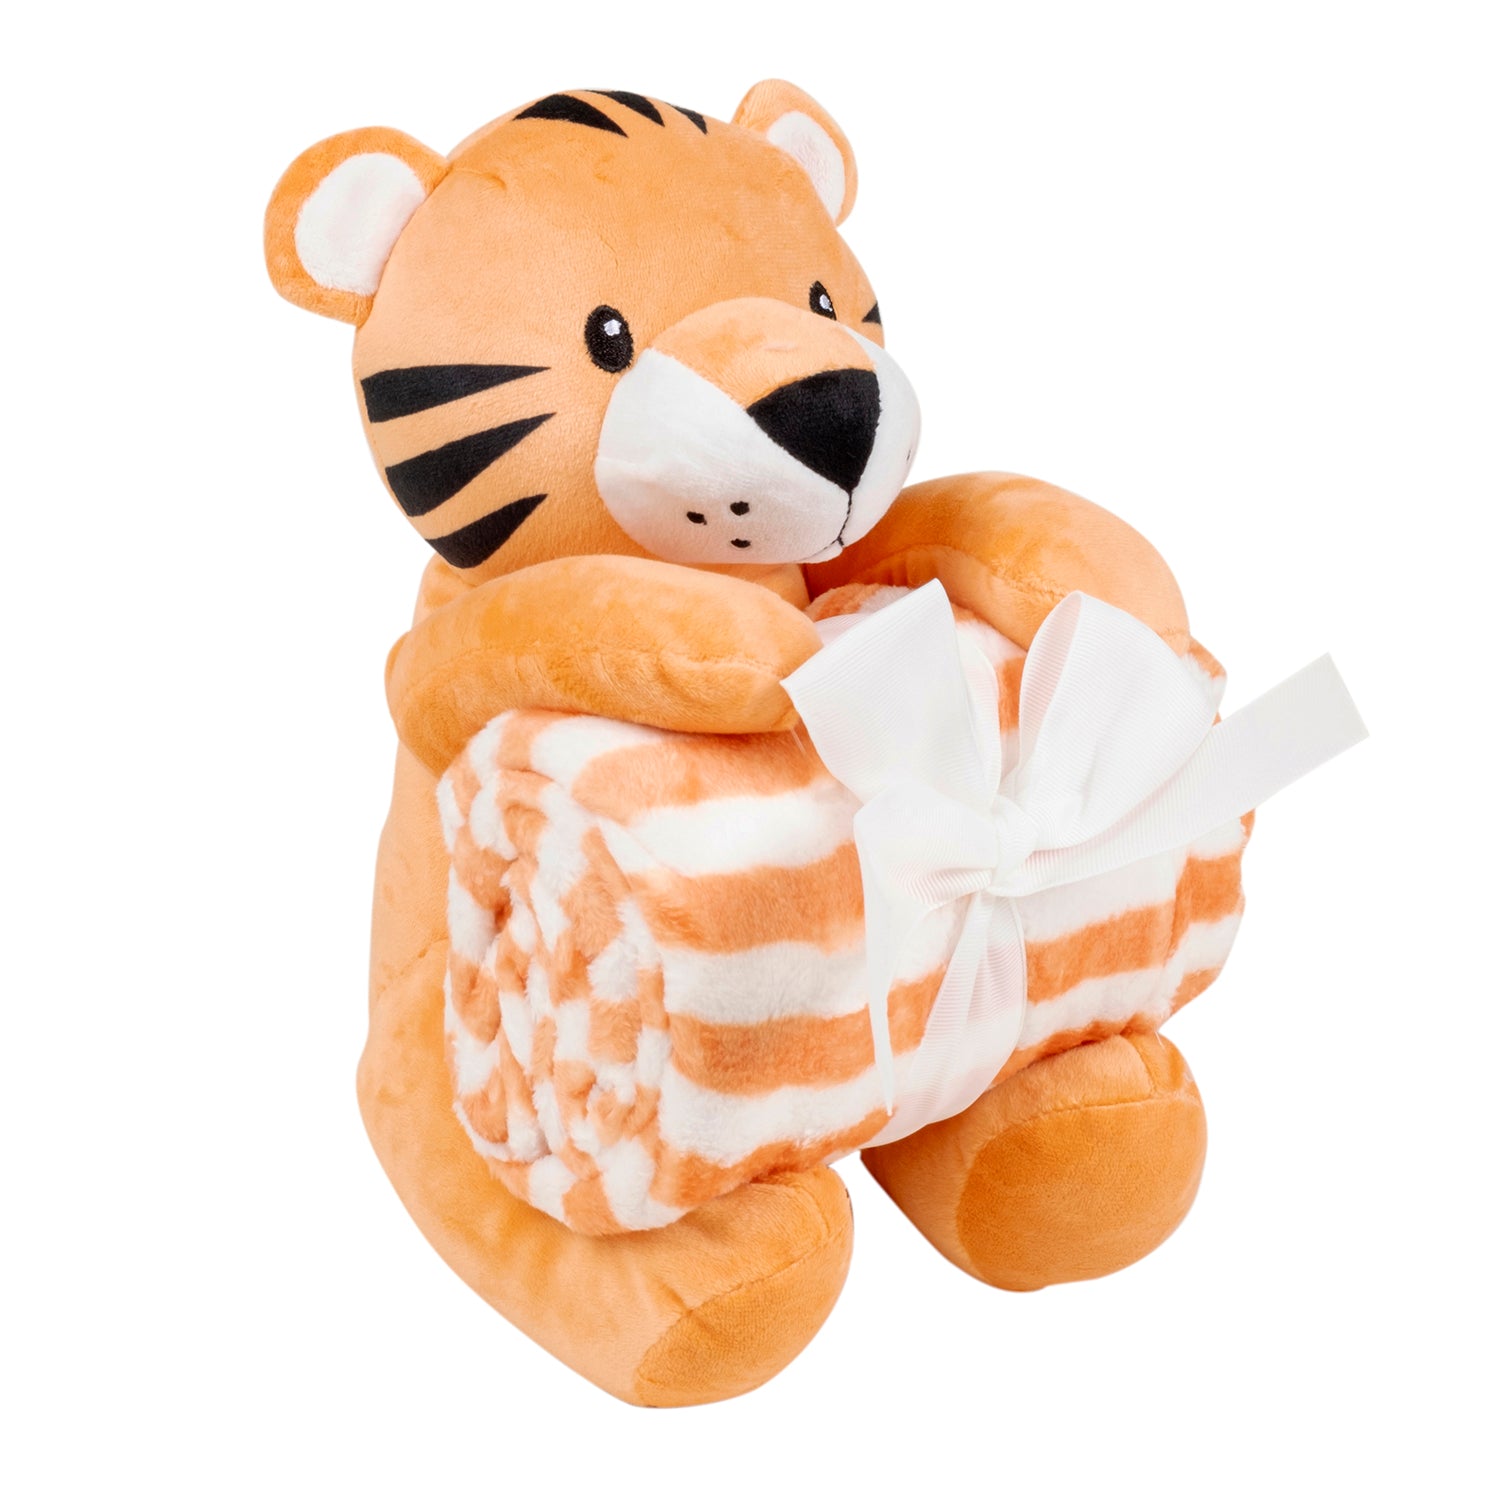 Baby Moo Tiger Snuggle Buddy Soft Rattle and Plush Blanket Gift Toy Blanket - Orange